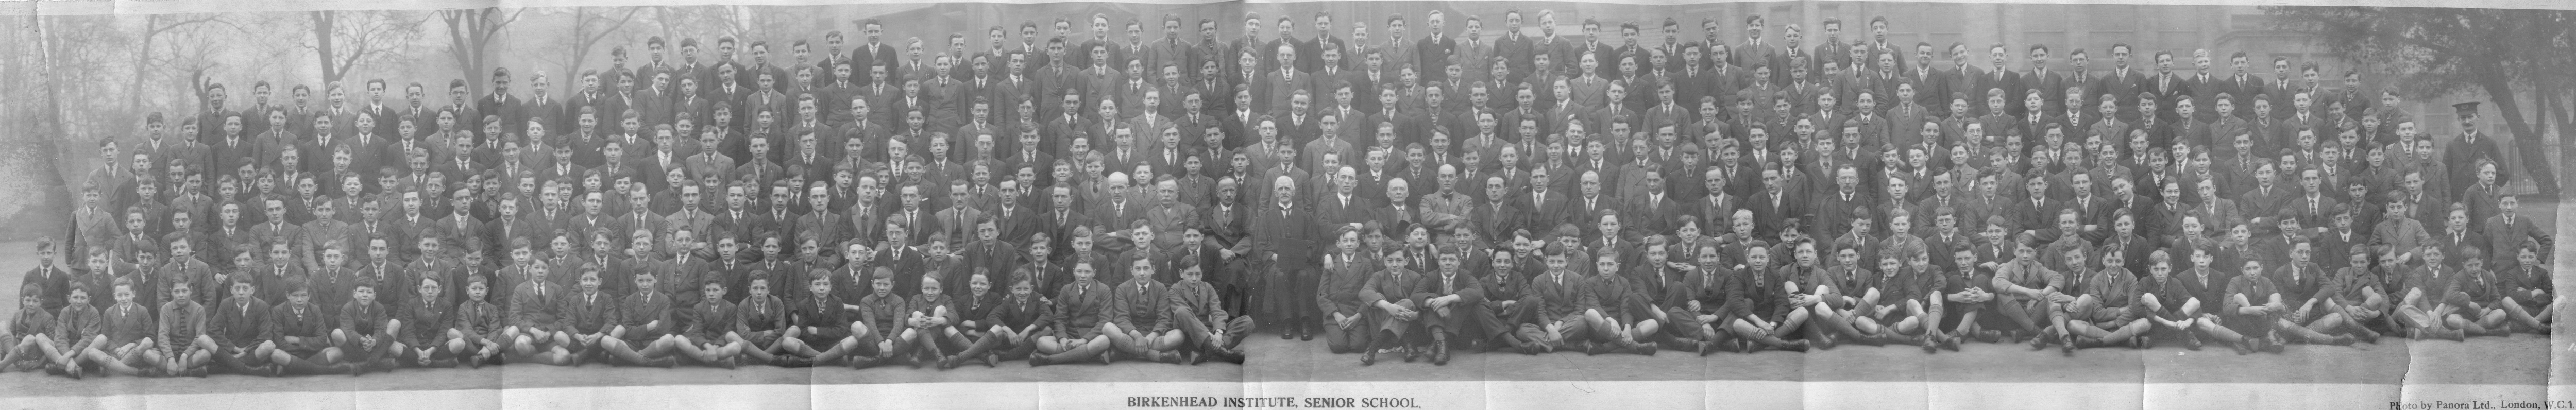 Whole School Photograph 1929